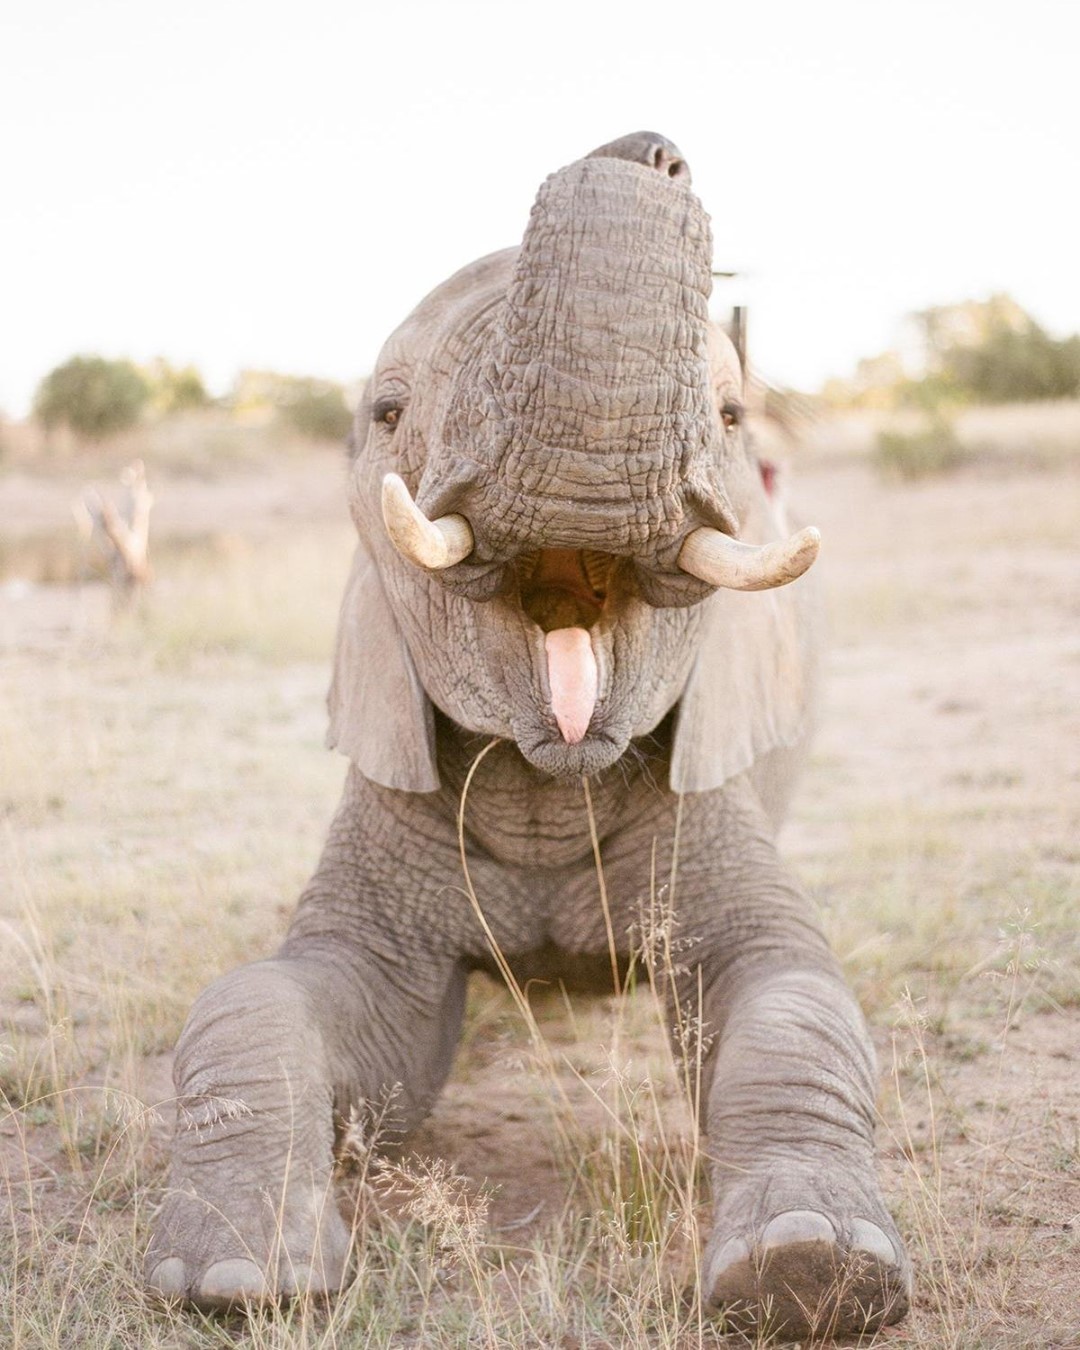 Ivory Ella - Baby elephant tongue appreciation post! 💖 👅 😜 Comment your favorite pink emojis below - ready go! #SaveTheElephants